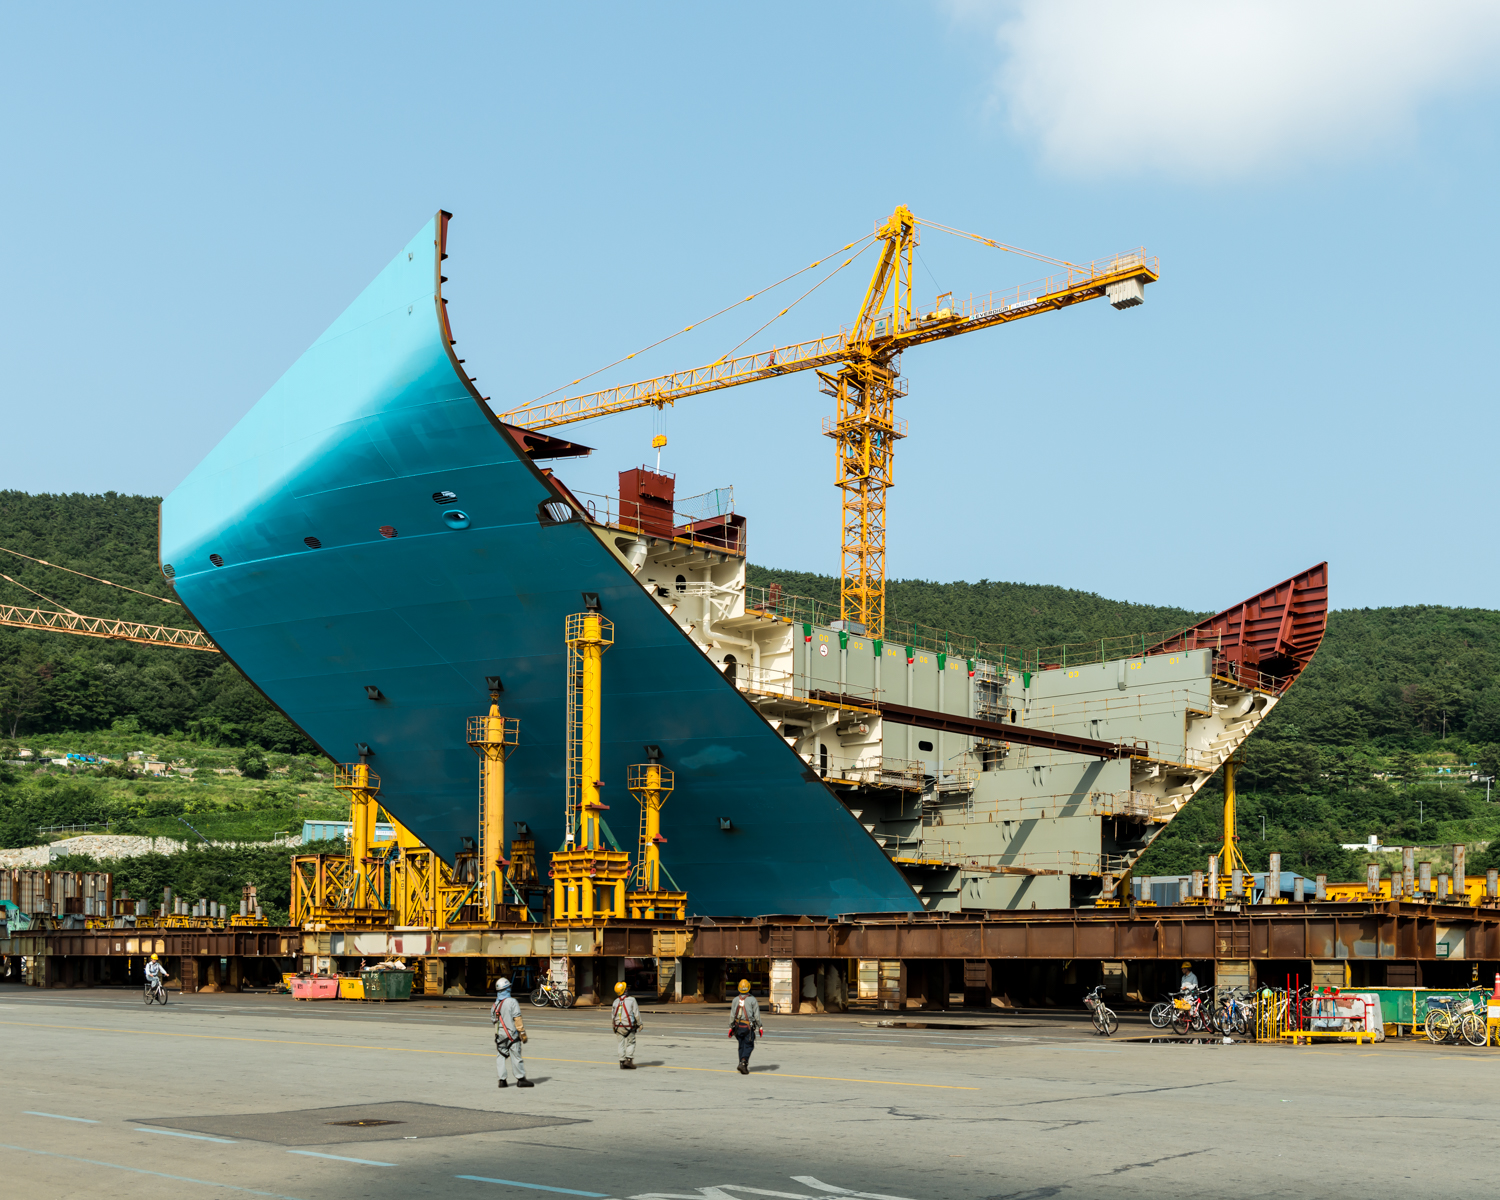 The Triple-E container ship in construction in Okpo port in South Korea.